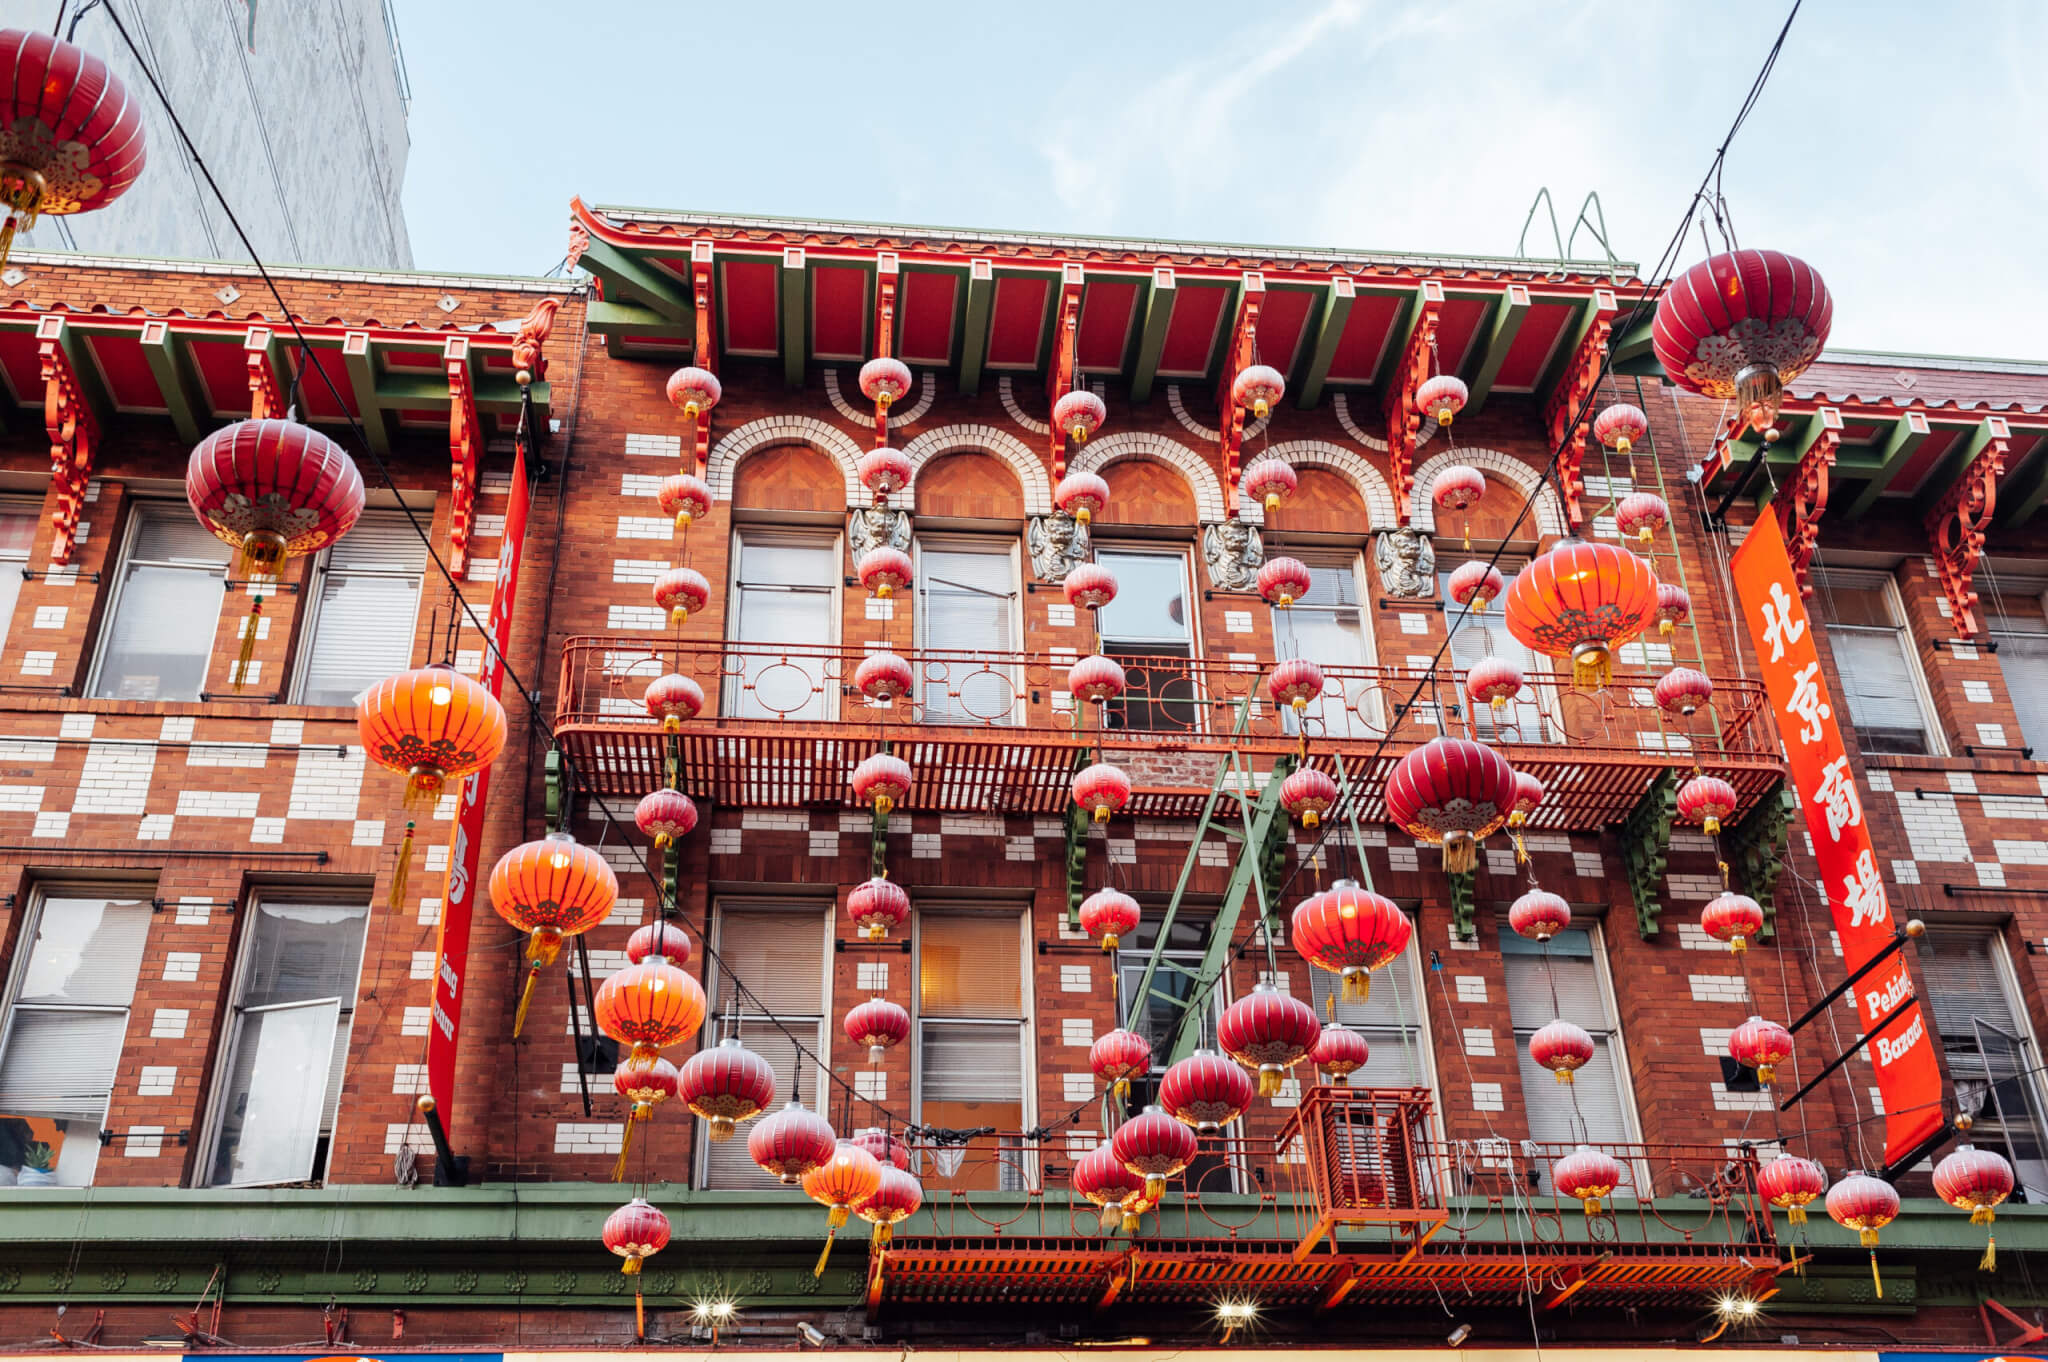 Building in Chinatown in San Francisco, California.